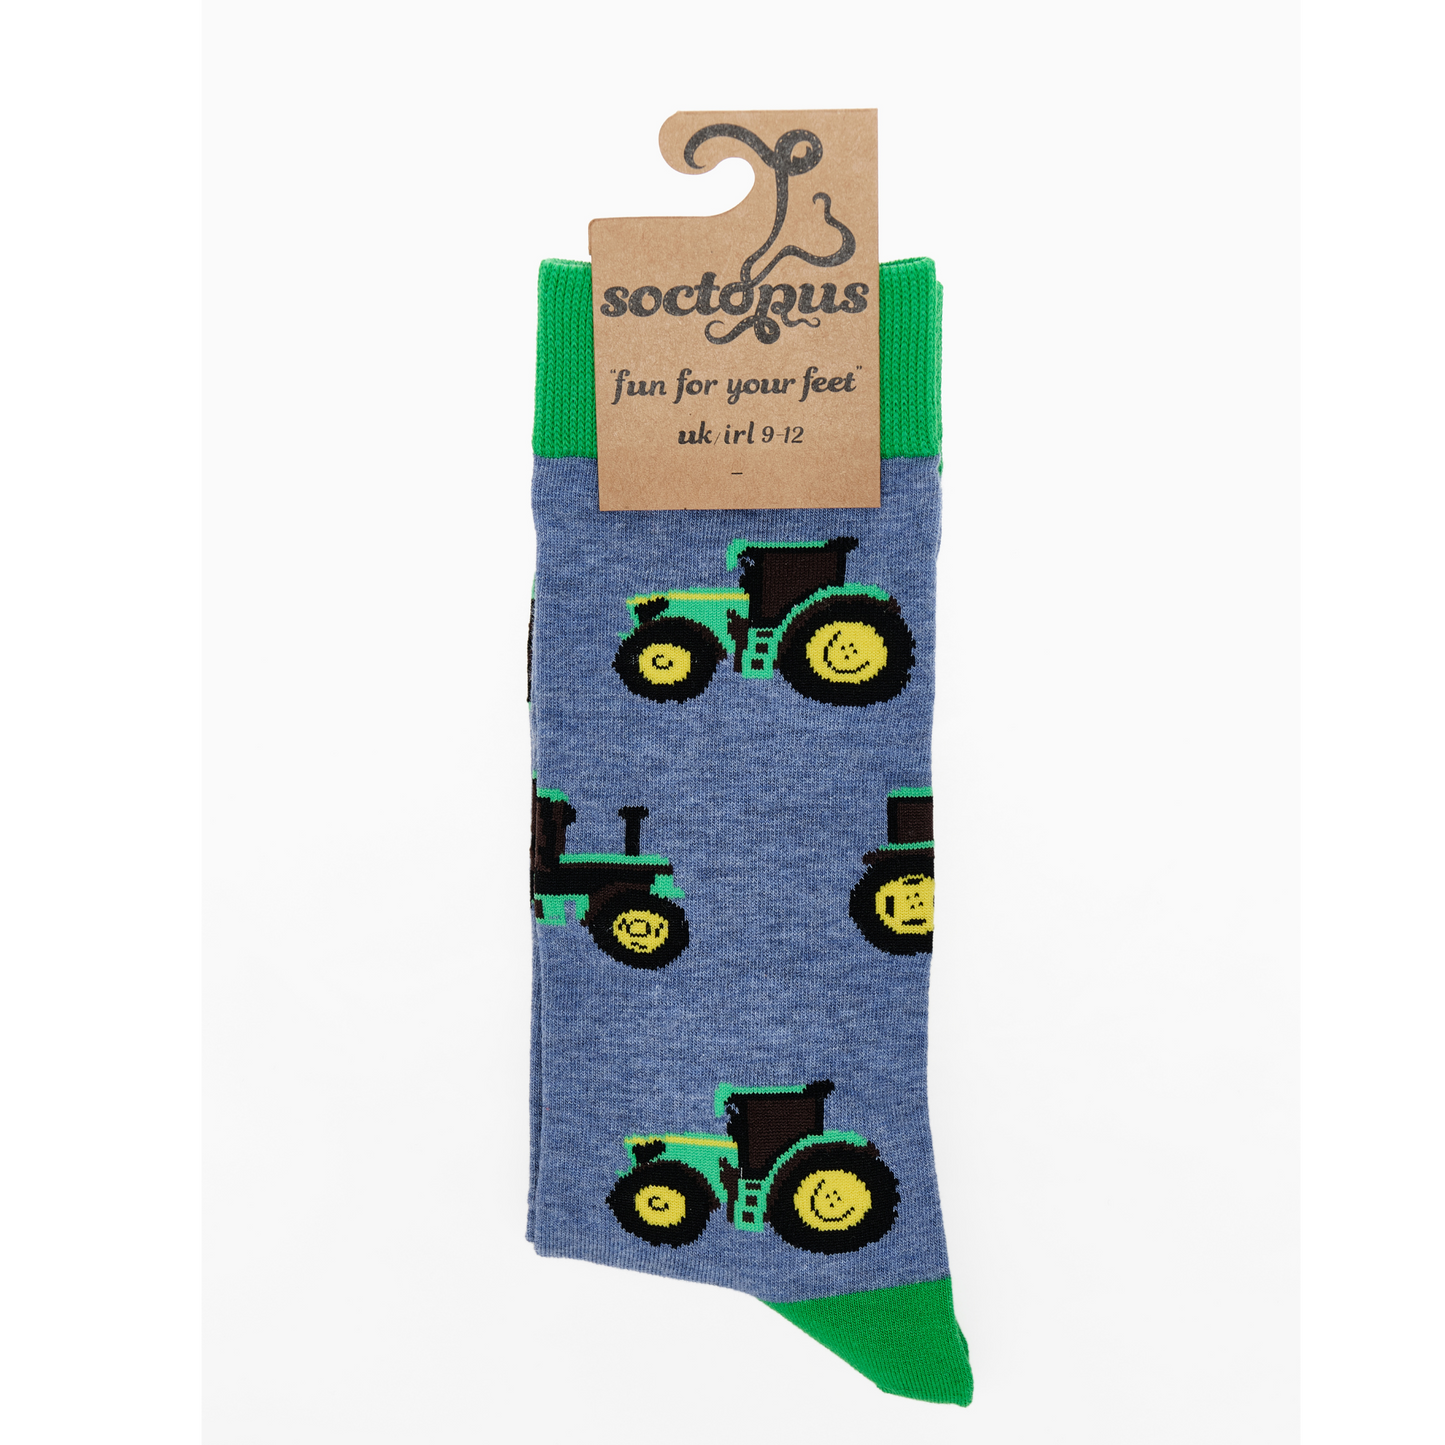 Green Machine Socks